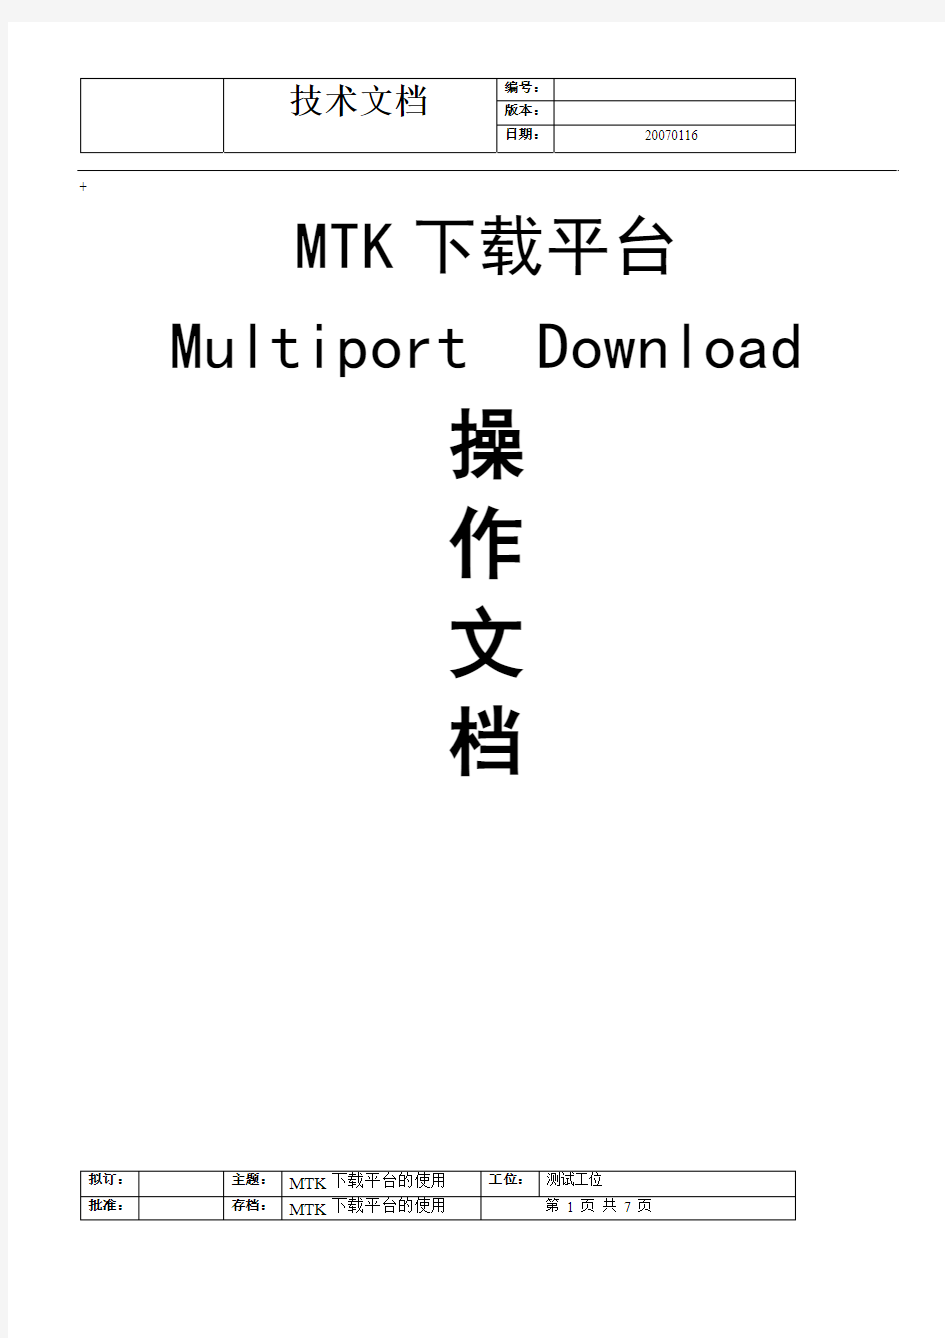 MTK下载平台操作文档